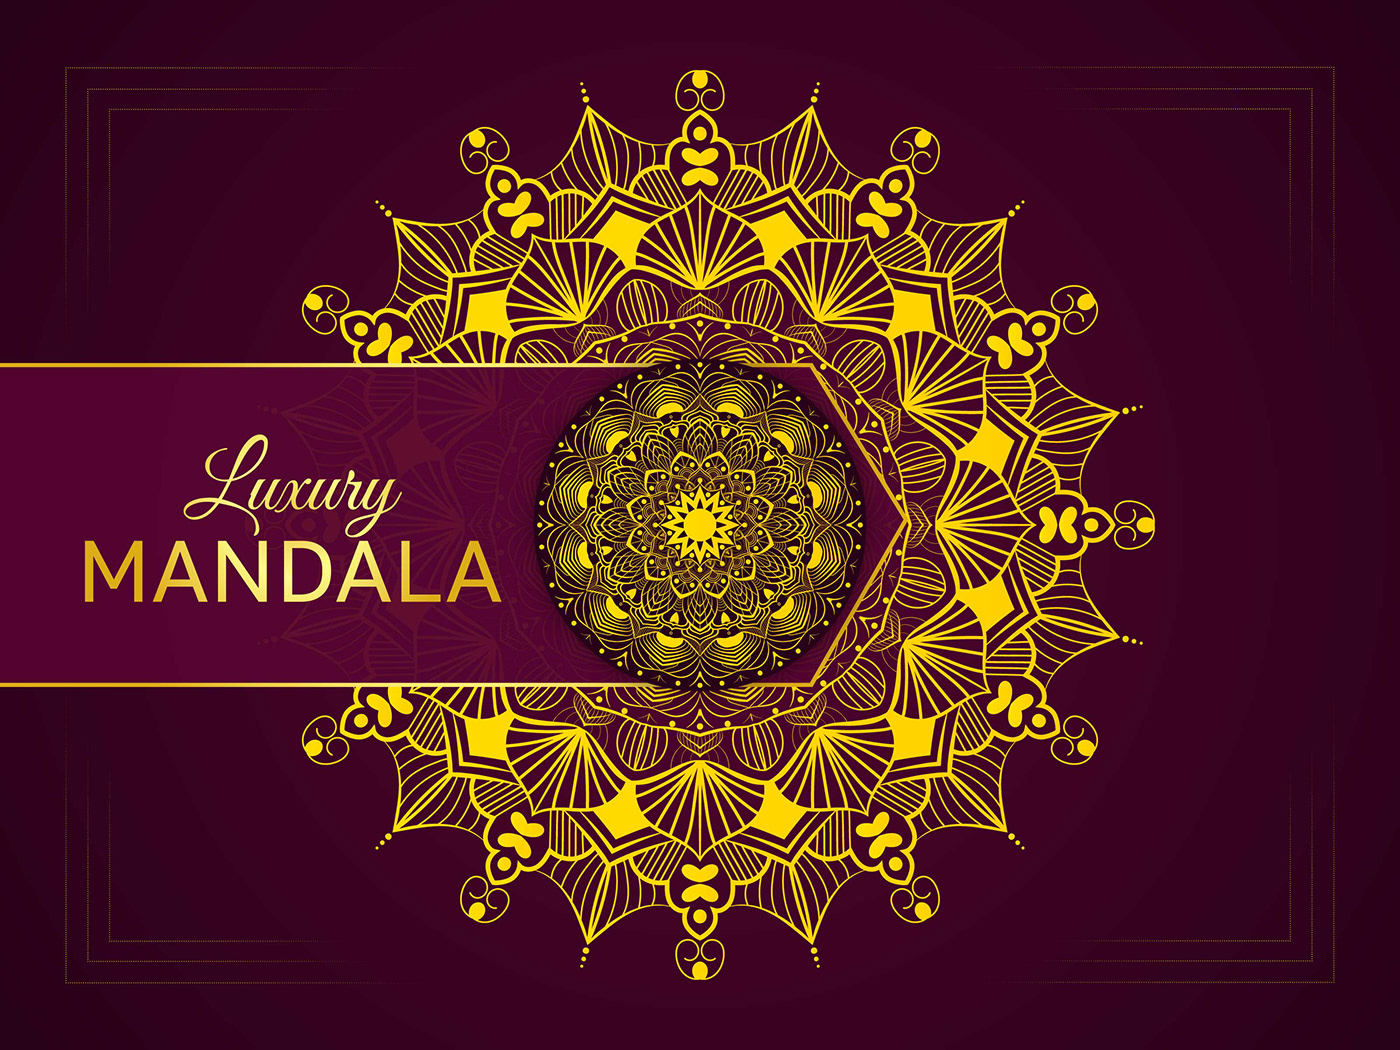 Mandala gold floral ornament ILLUSTRATION  art decoration element background abstract